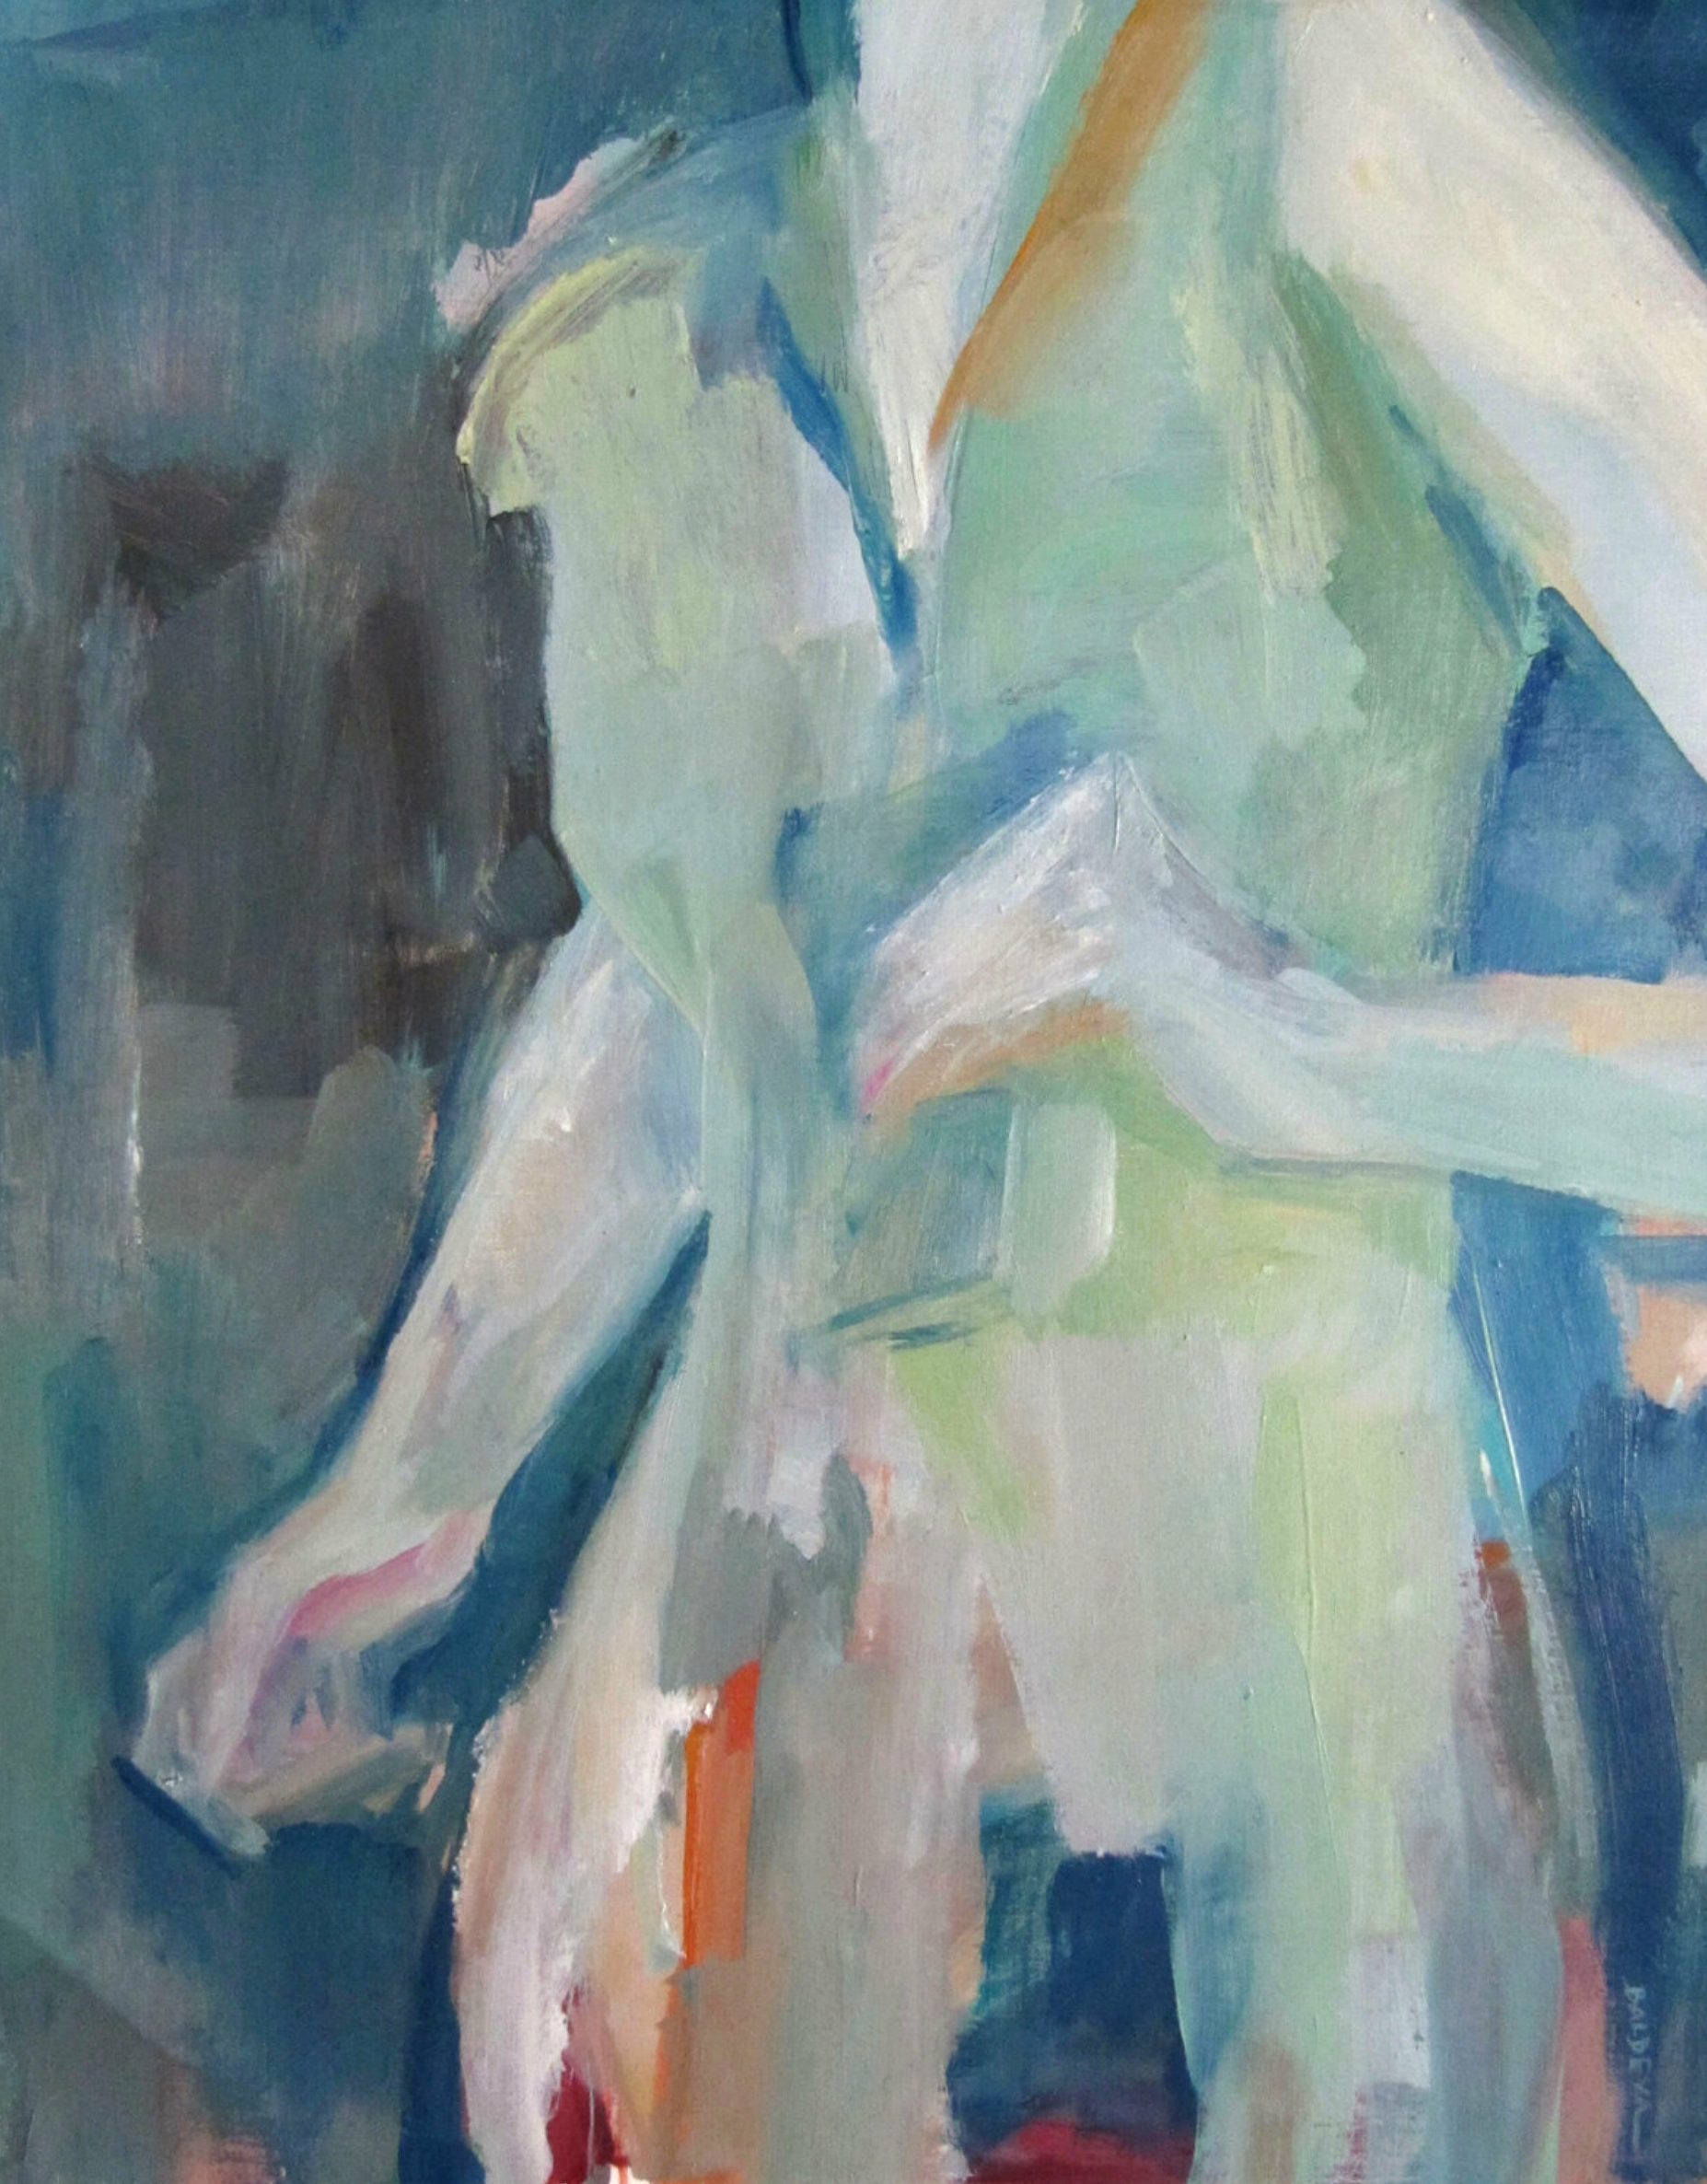 Sylvia Baldeva的 "Cource "展示了一幅半抽象的油画作品。  一个女人走在生活场景中的特写。